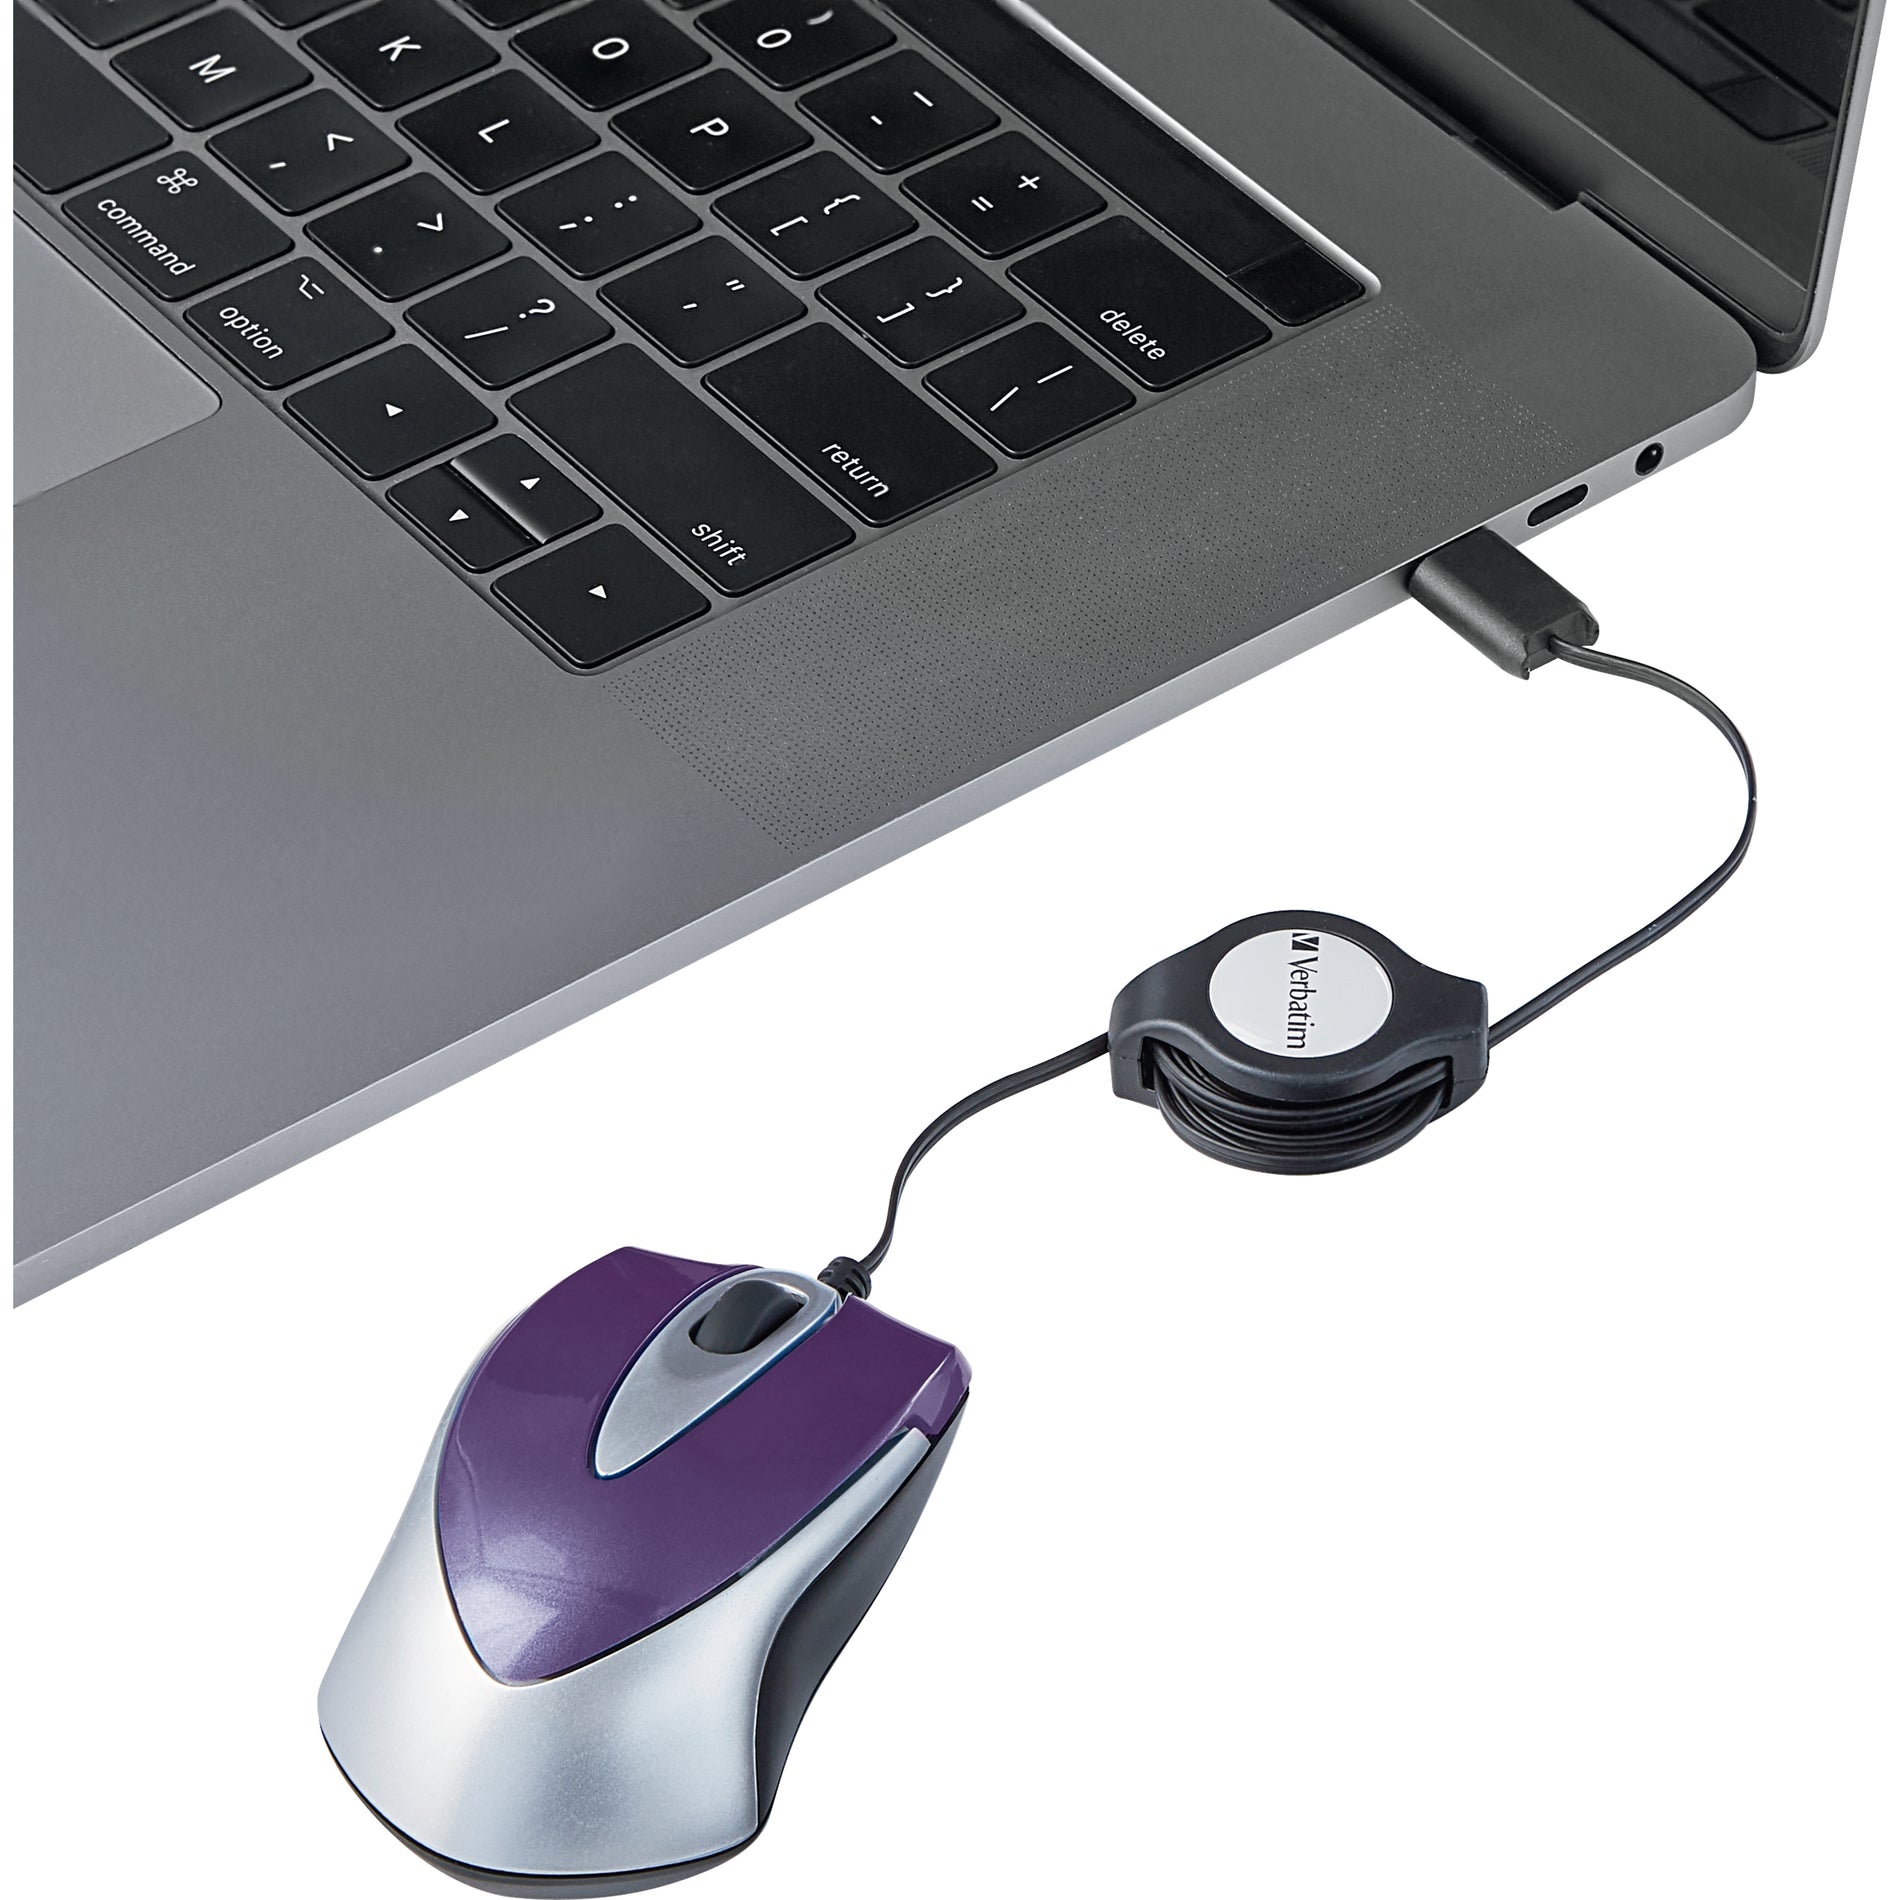 Verbatim 70238 USB-C Mini Optical Travel Mouse-Purple, 3 Buttons, Cable Connectivity